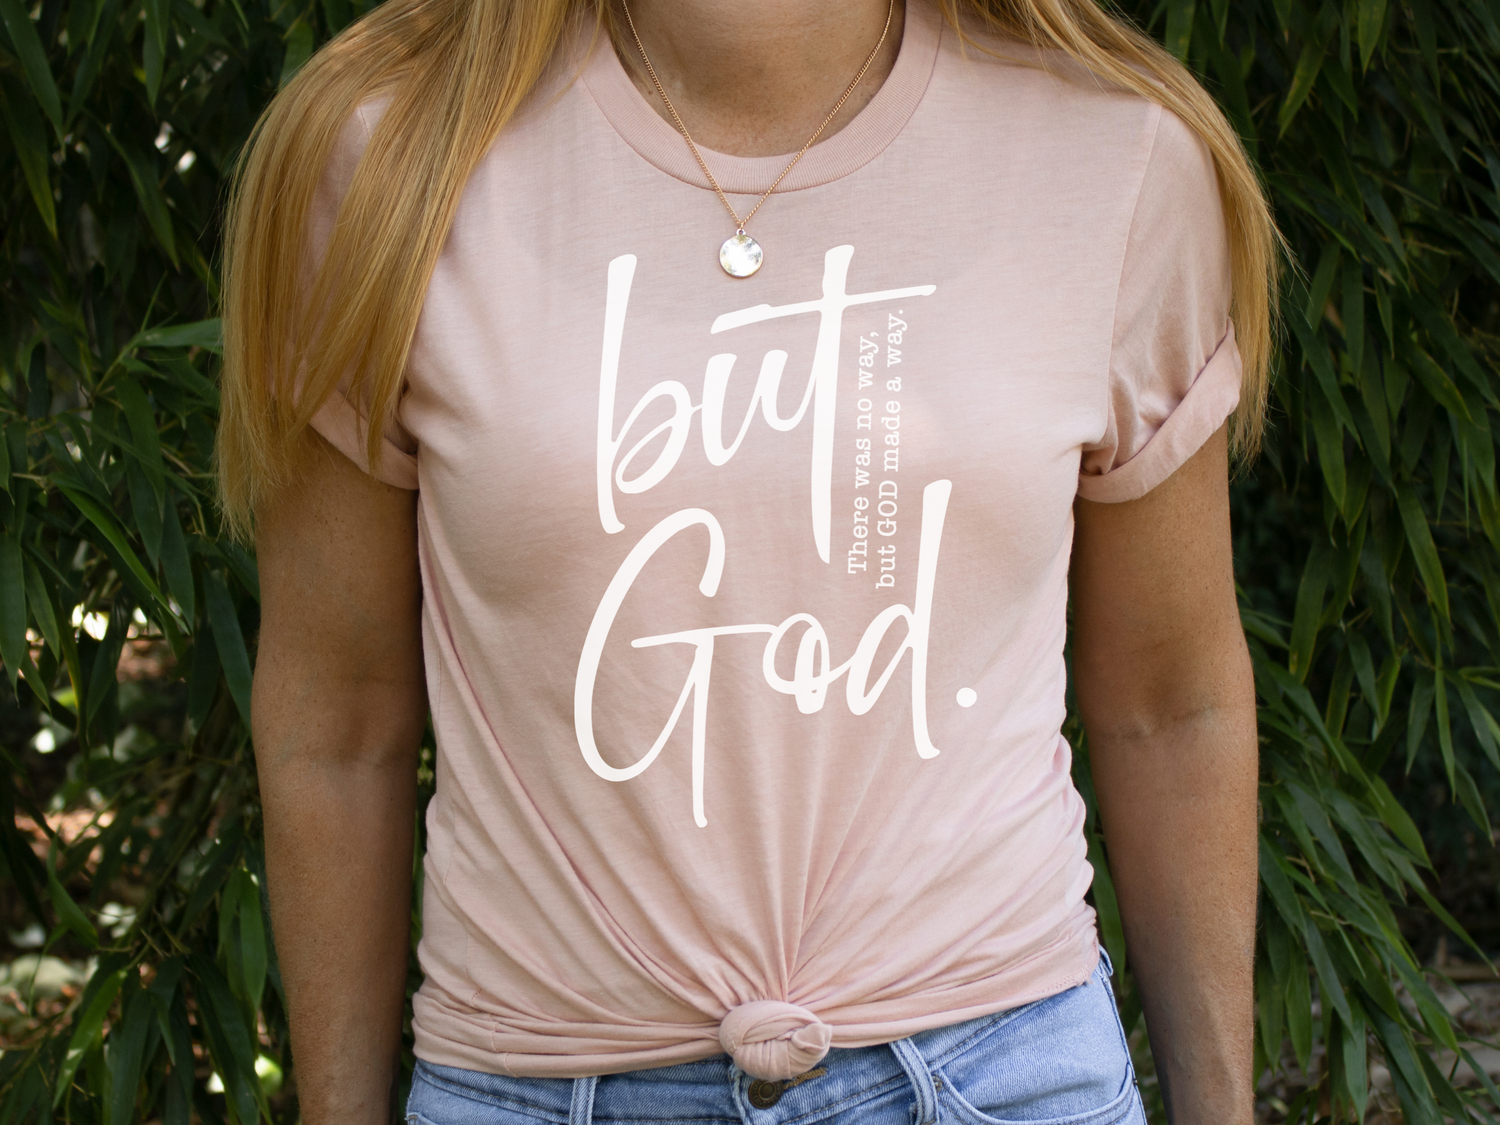 But God design on peach color t-shirt